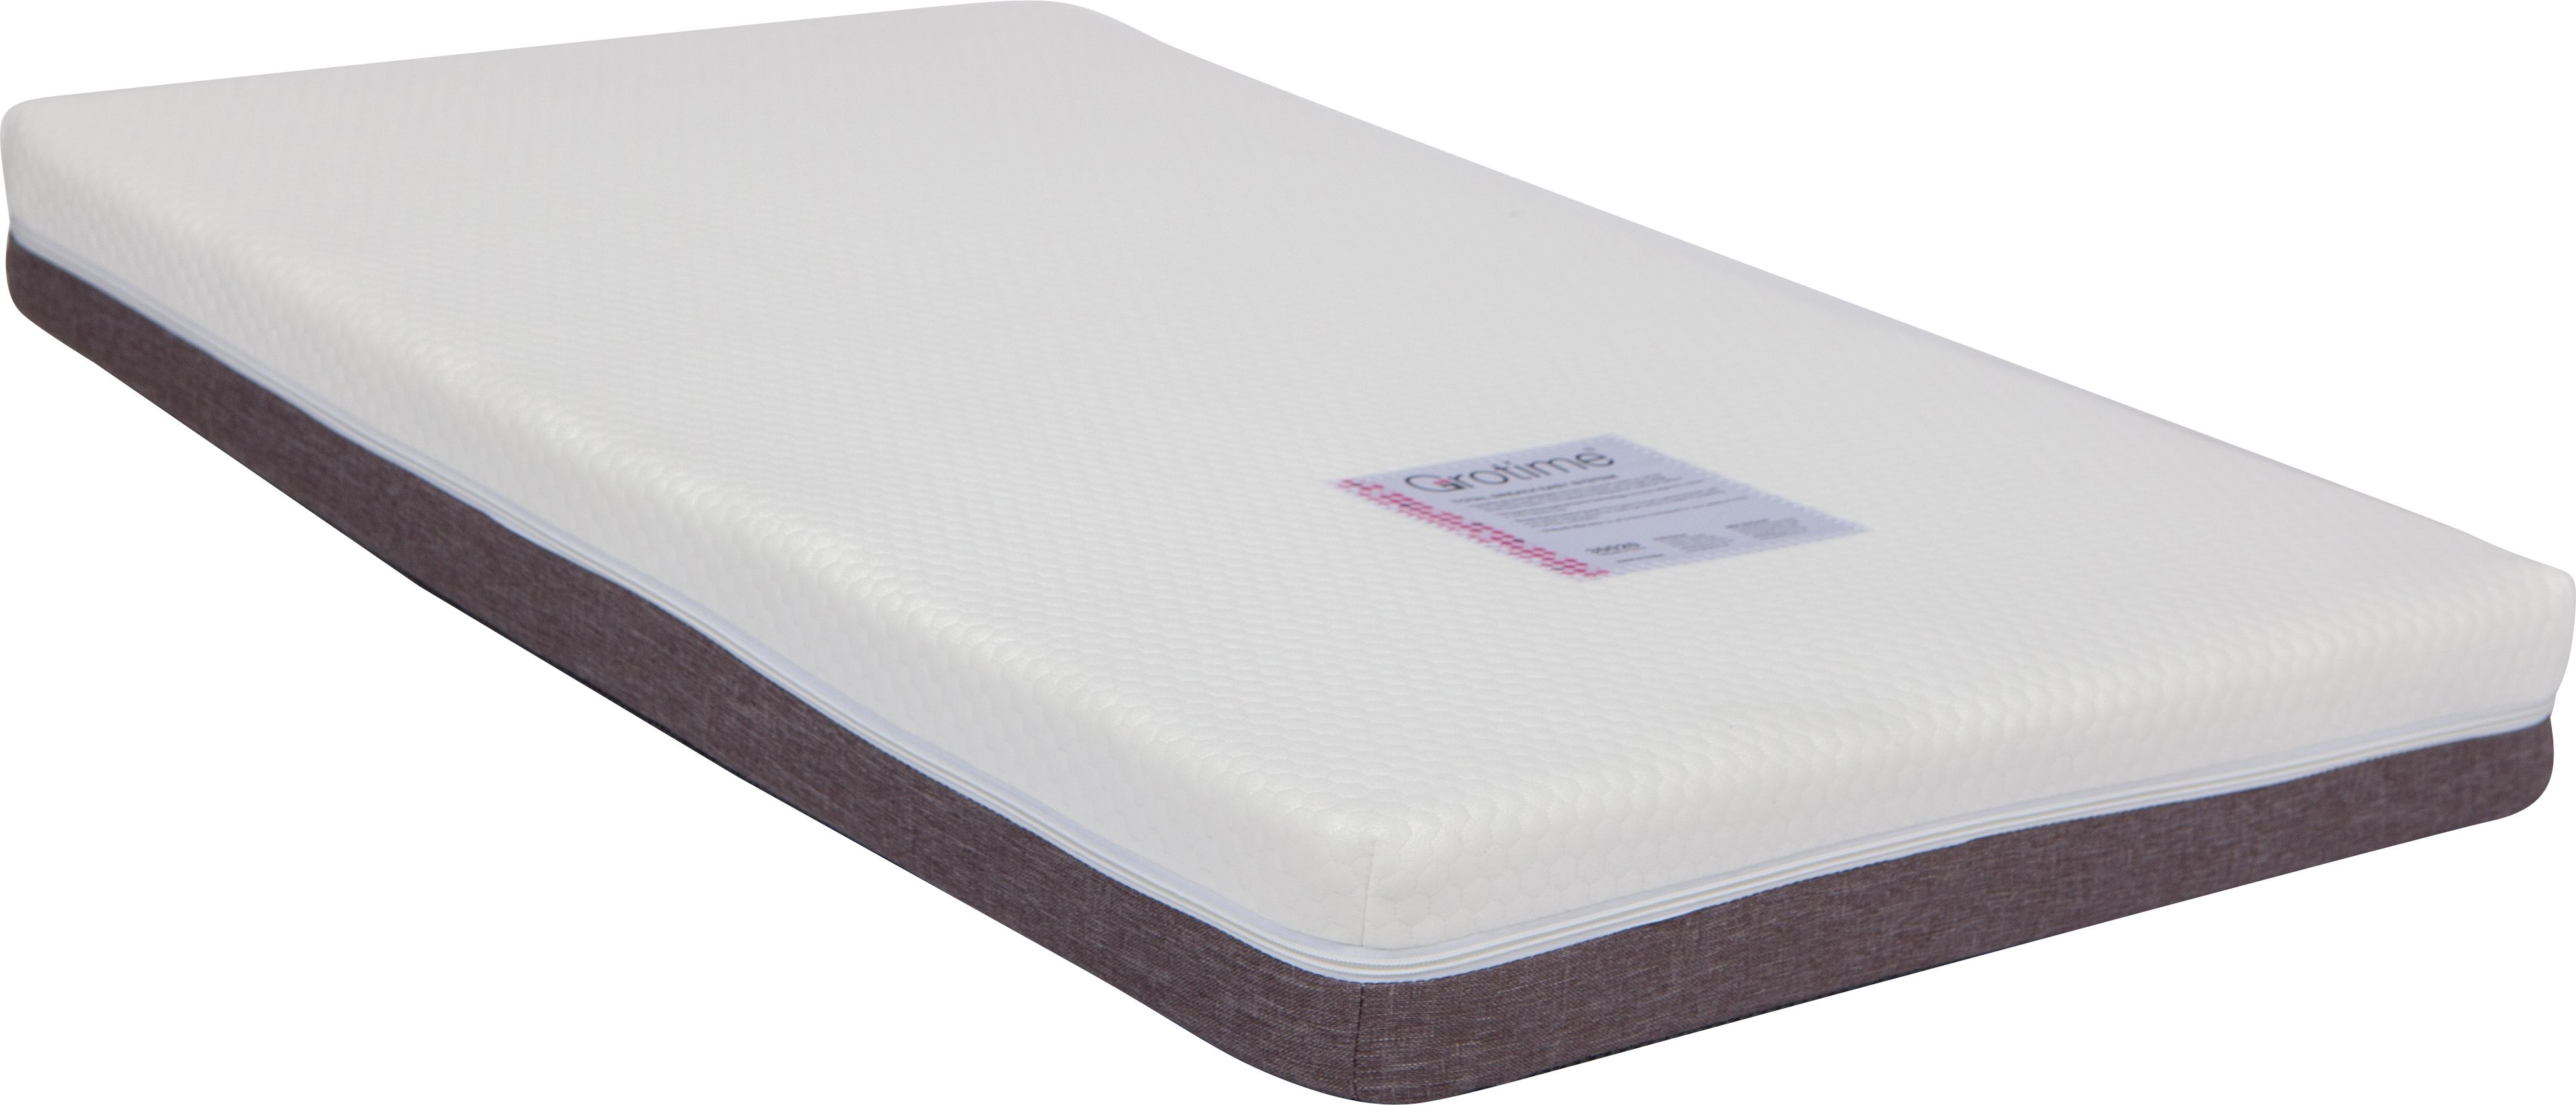 grotime breathe easy latex mattress